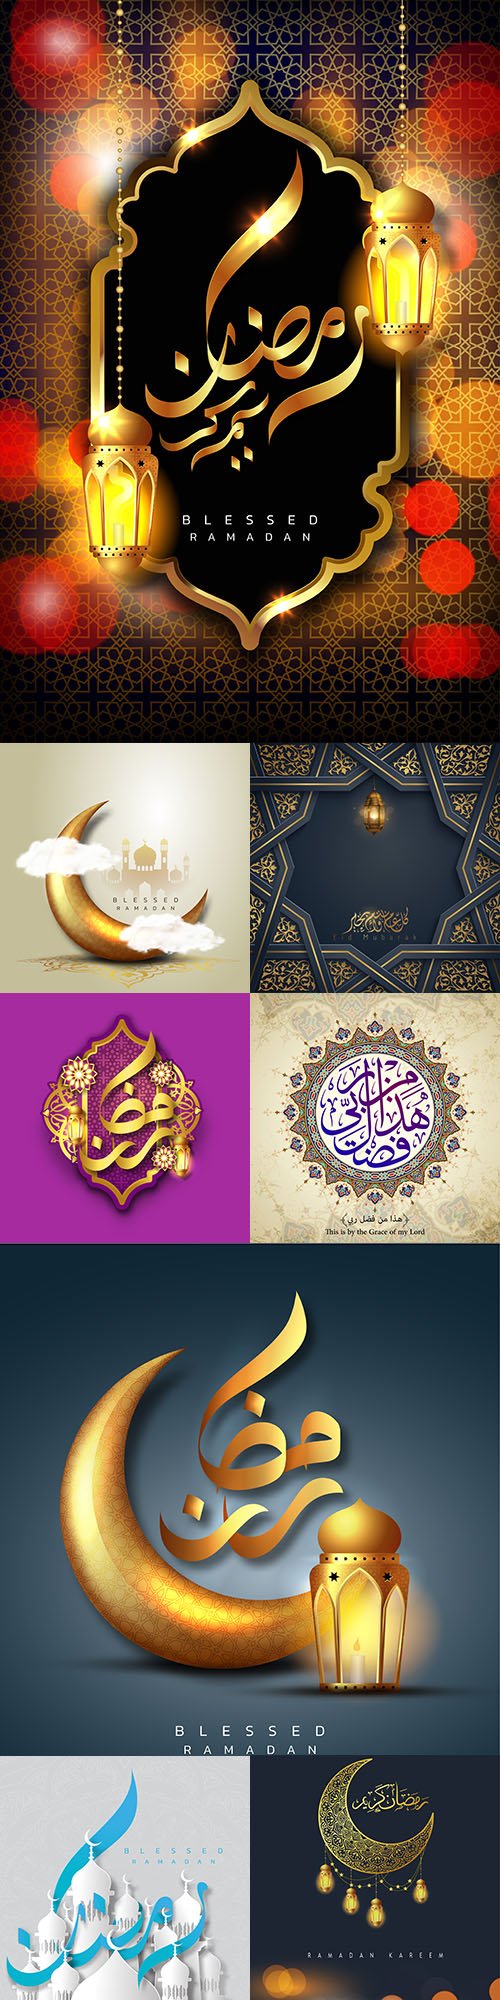 Ramadan Kareem Islamic postcard design template 17